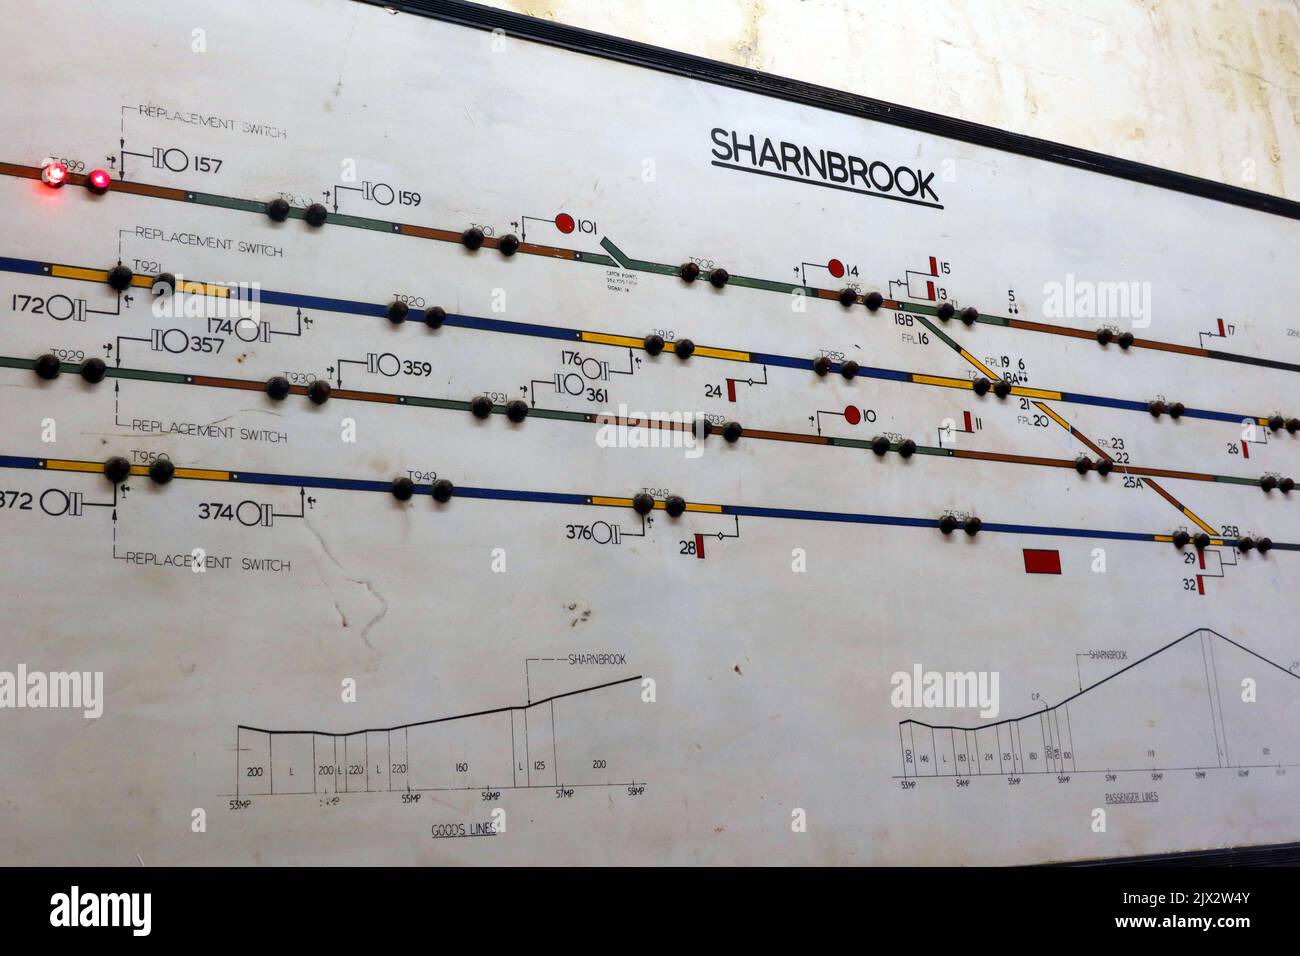 Sharnbrook signal box railway schematic, with indicator lights, Crewe Heritage centre, Cheshire, England, UK Stock Photo